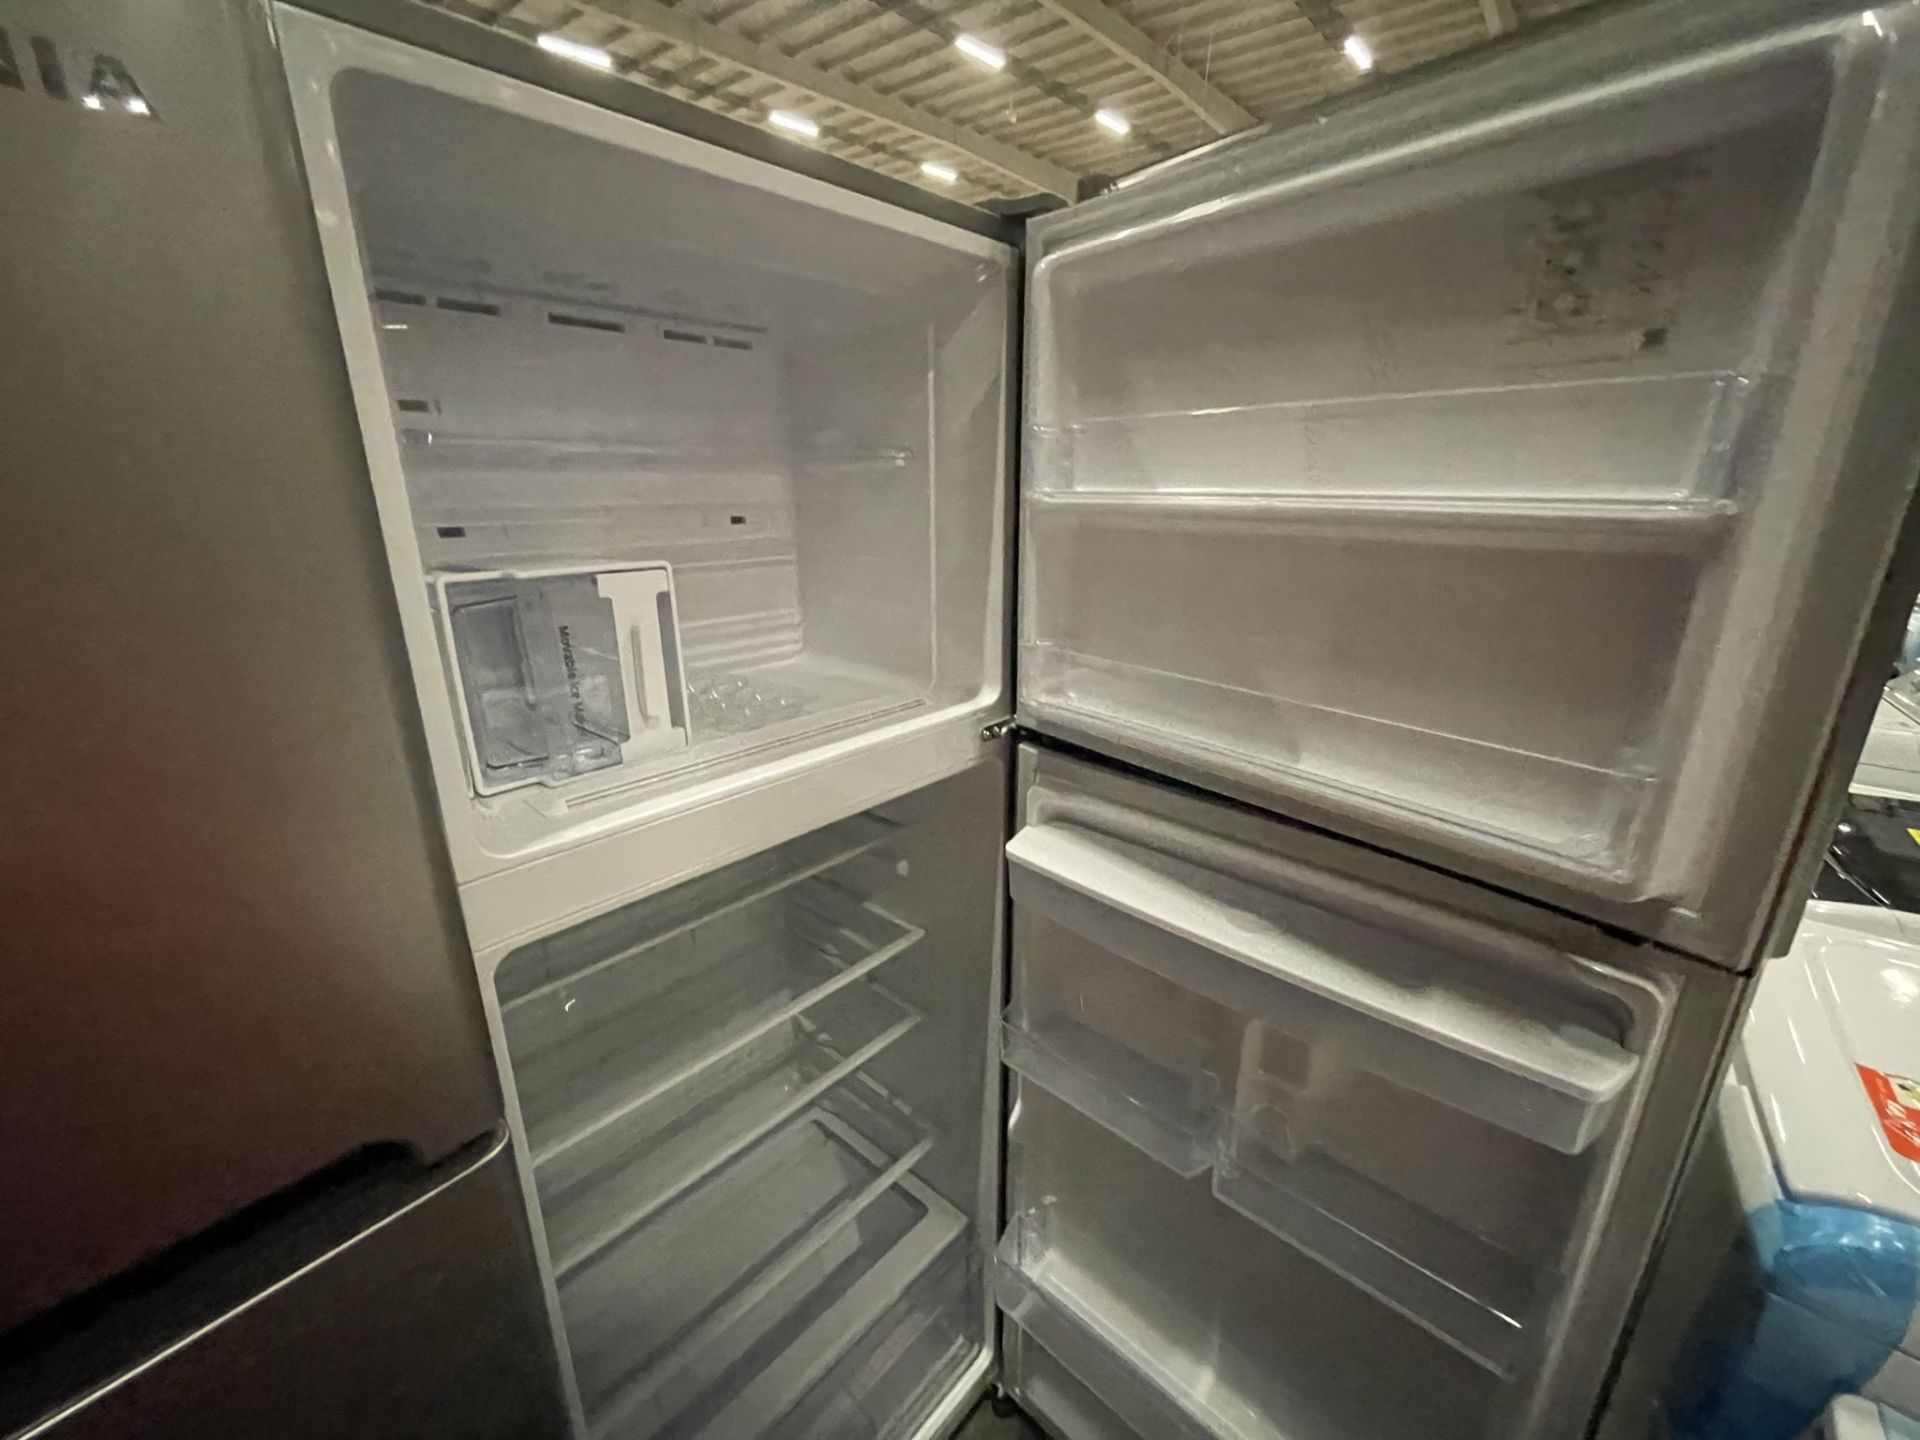 (EQUIPO NUEVO) 1 Refrigerador Con Dispensador De Agua Marca SAMSUNG, Modelo RT38A571JS9, Serie A003 - Image 8 of 9